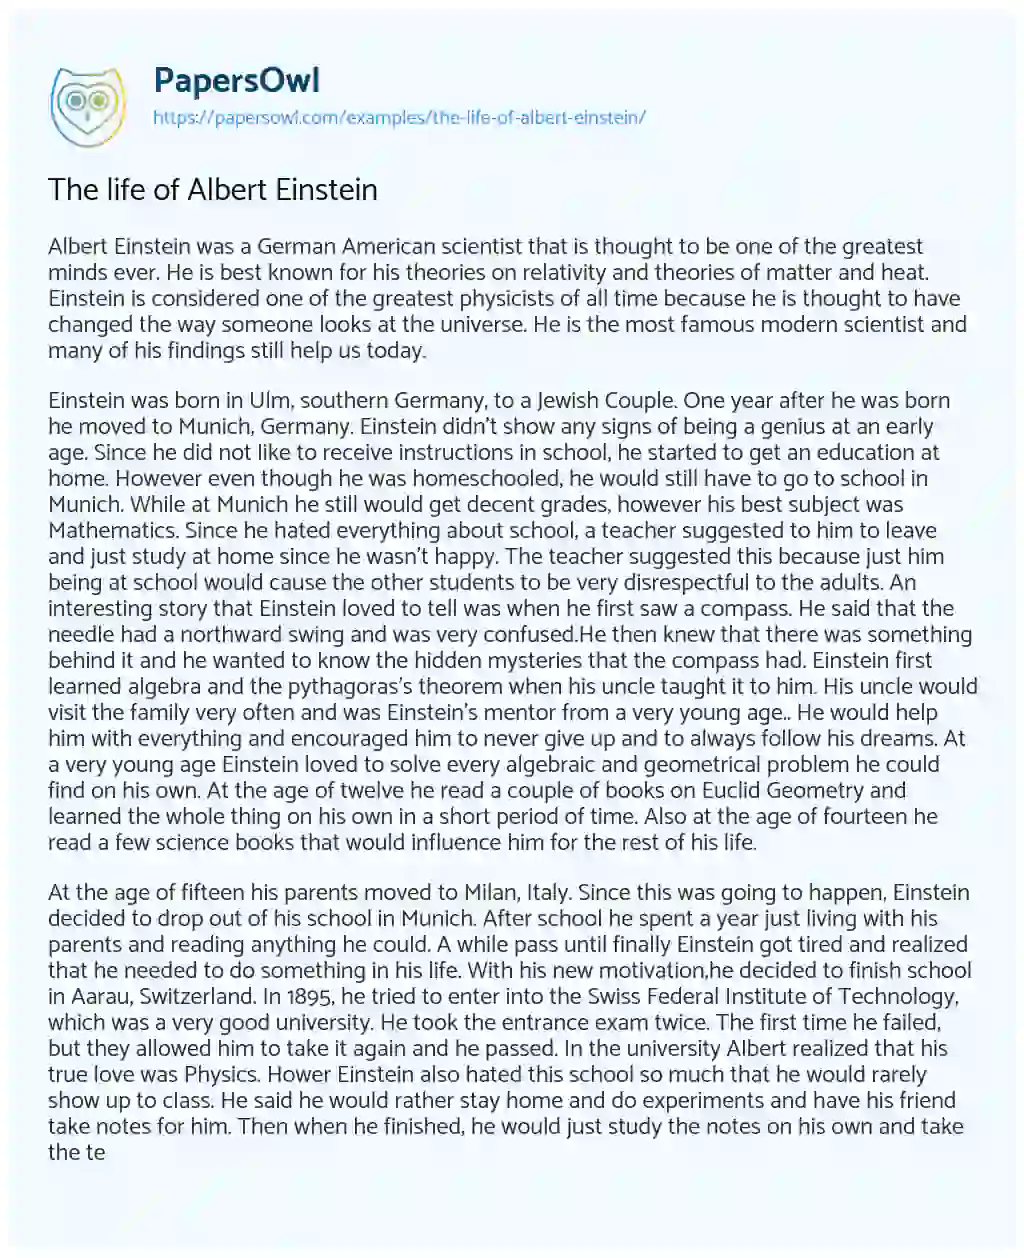 Essay on The Life of Albert Einstein